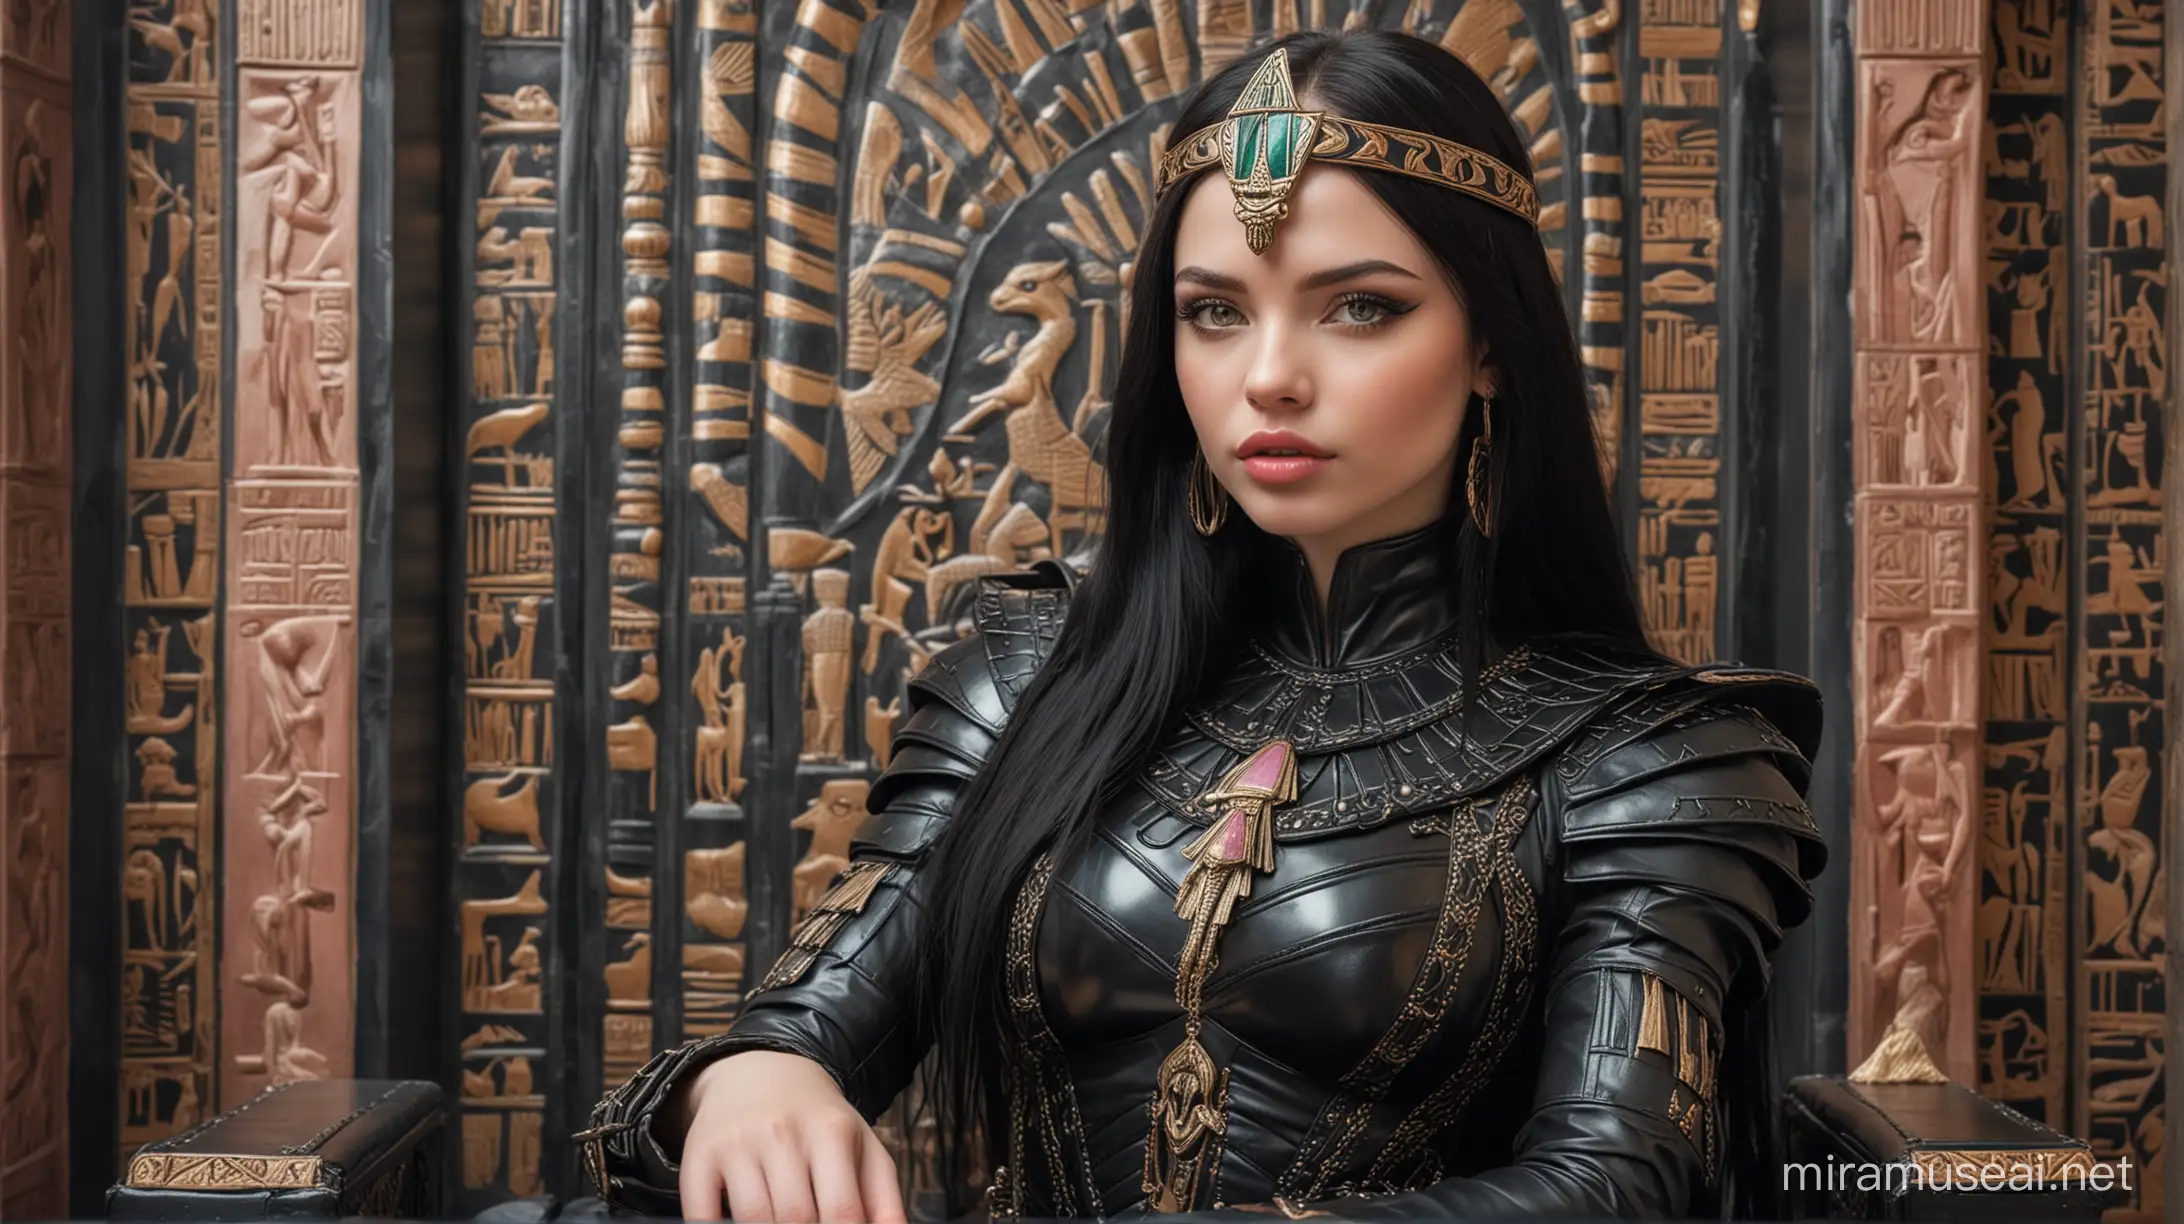 Elegant Woman in Black Leather Armor on Egyptian Throne